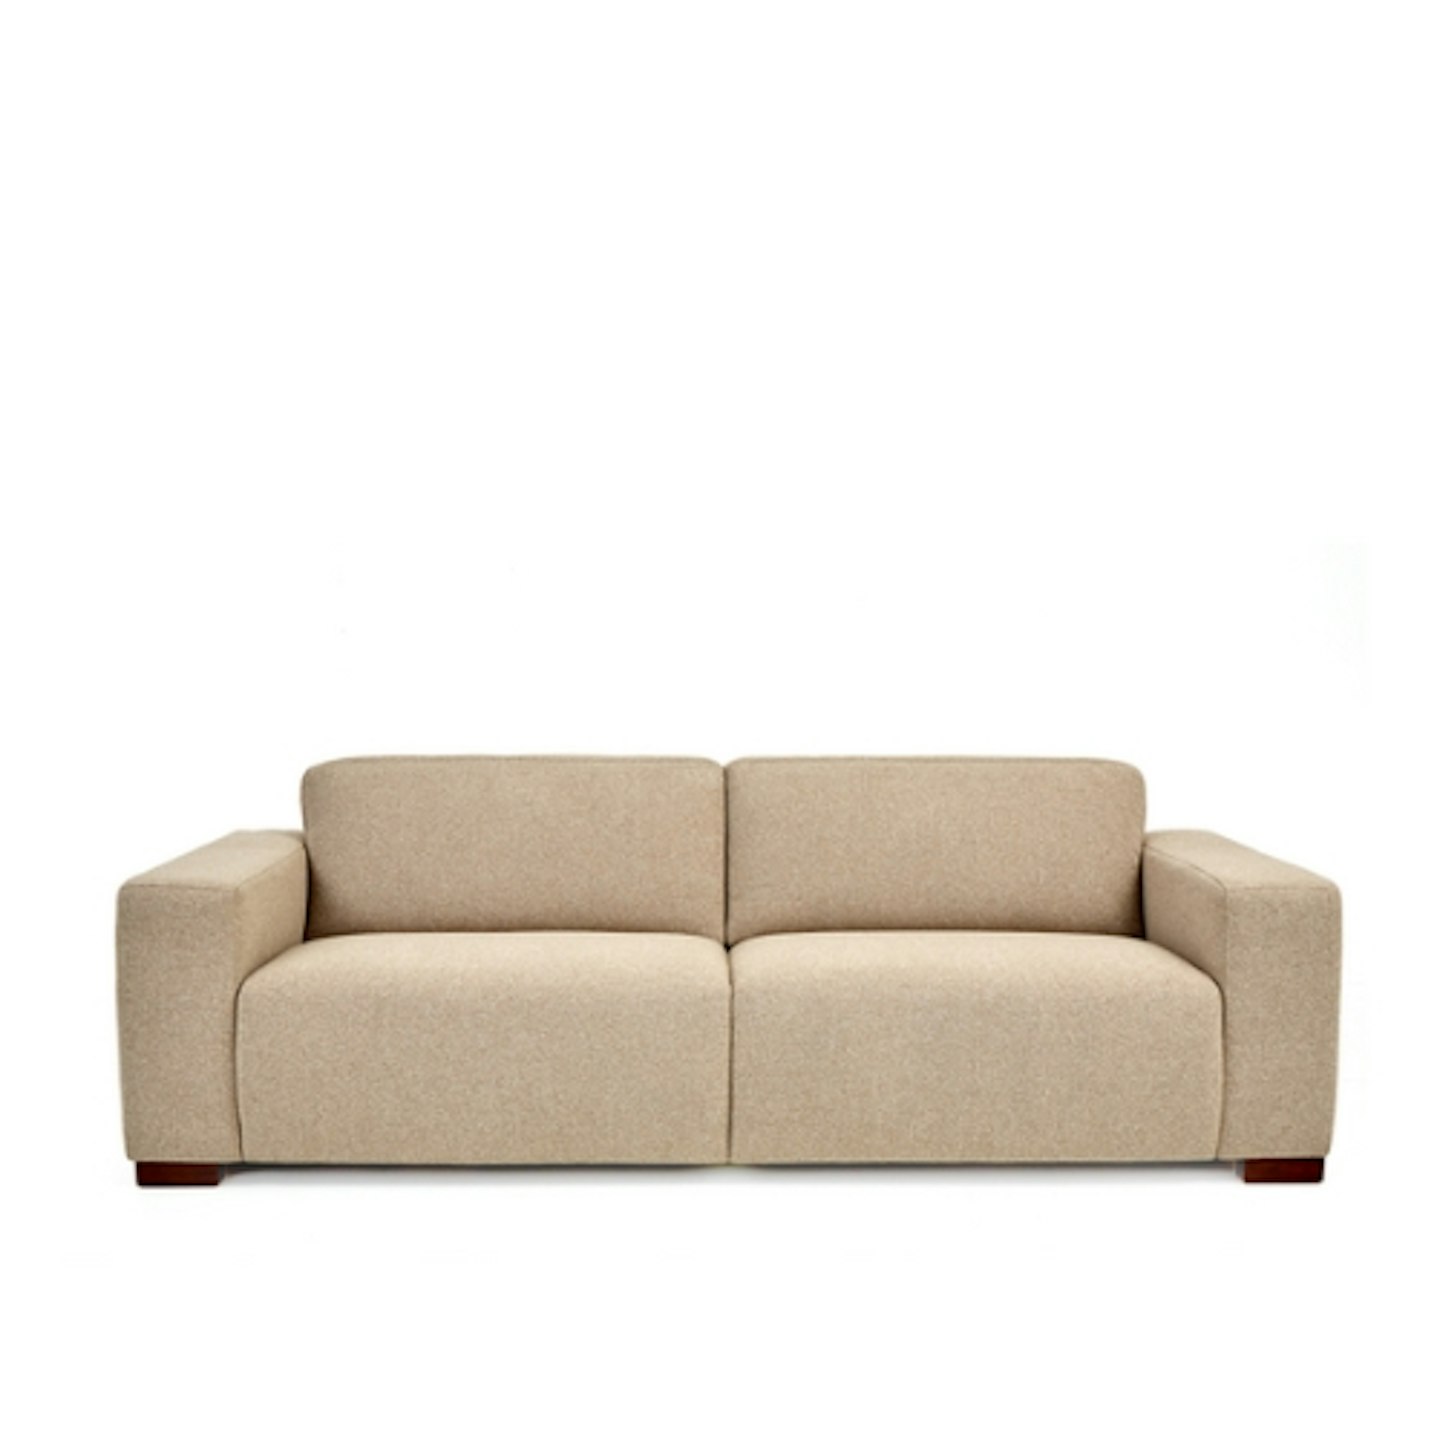 Michelle Keegan Cortes Three Seater Fabric Sofa